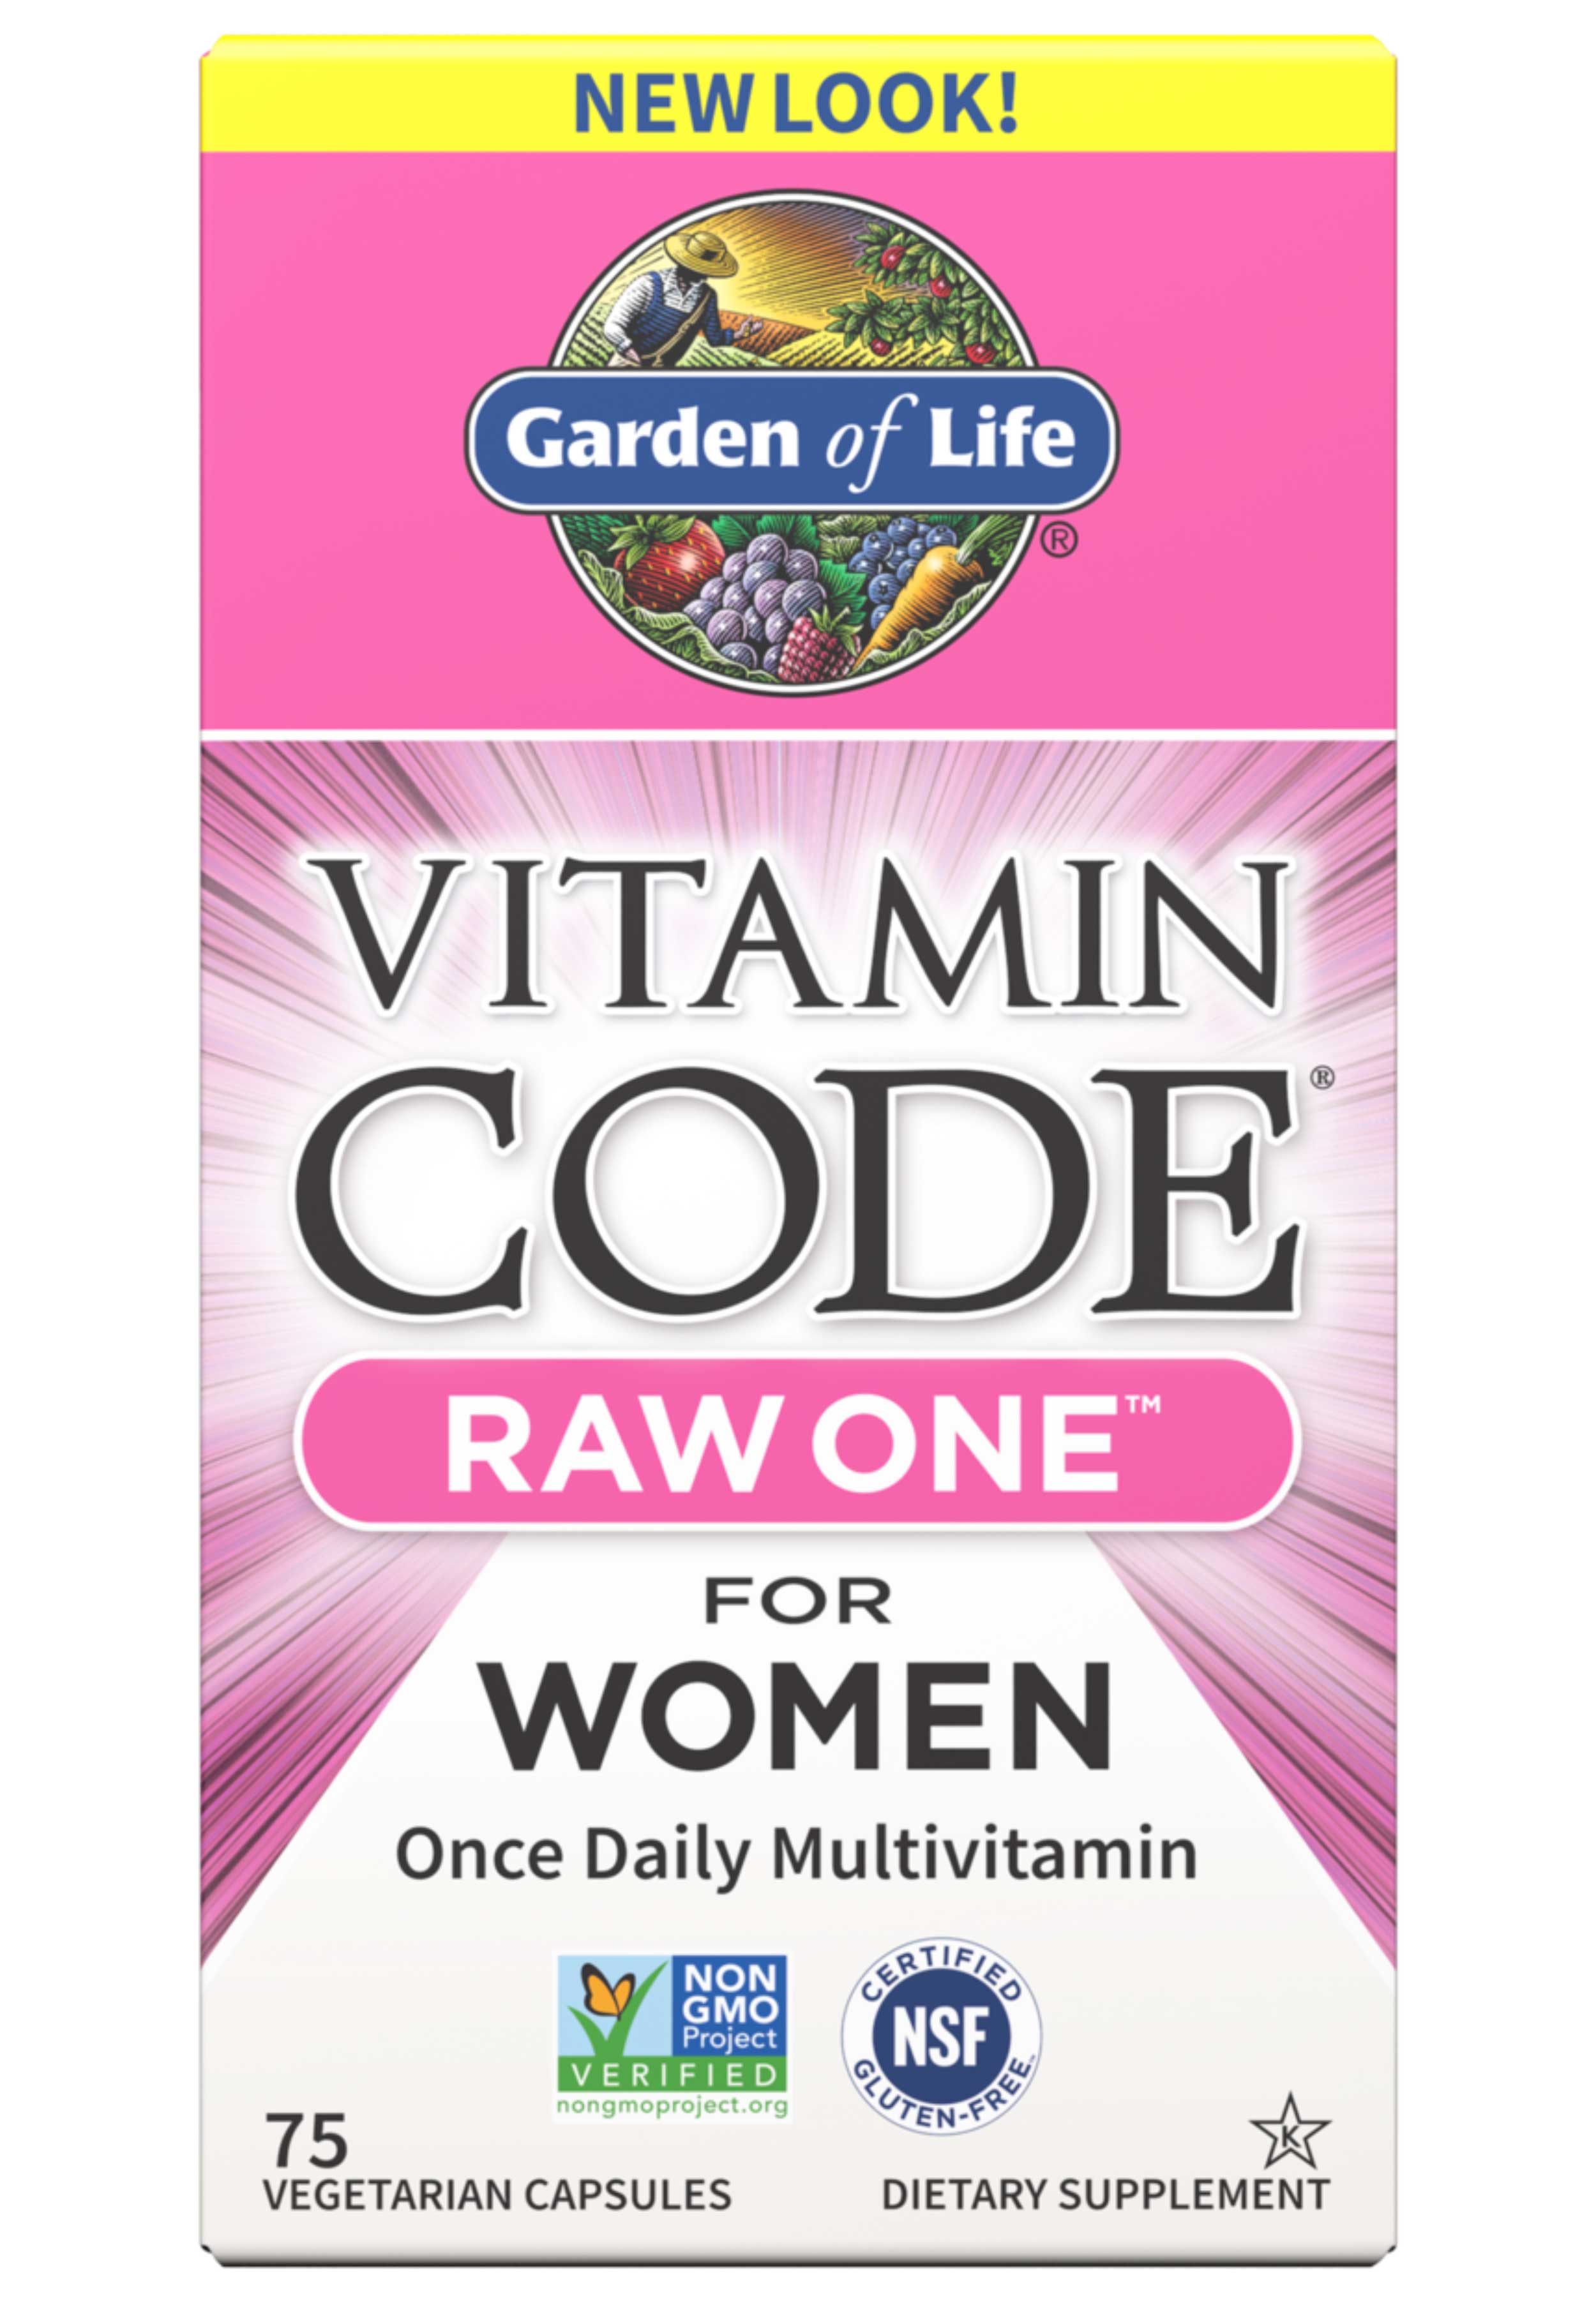 Garden of Life Vitamin Code RAW ONE for Women